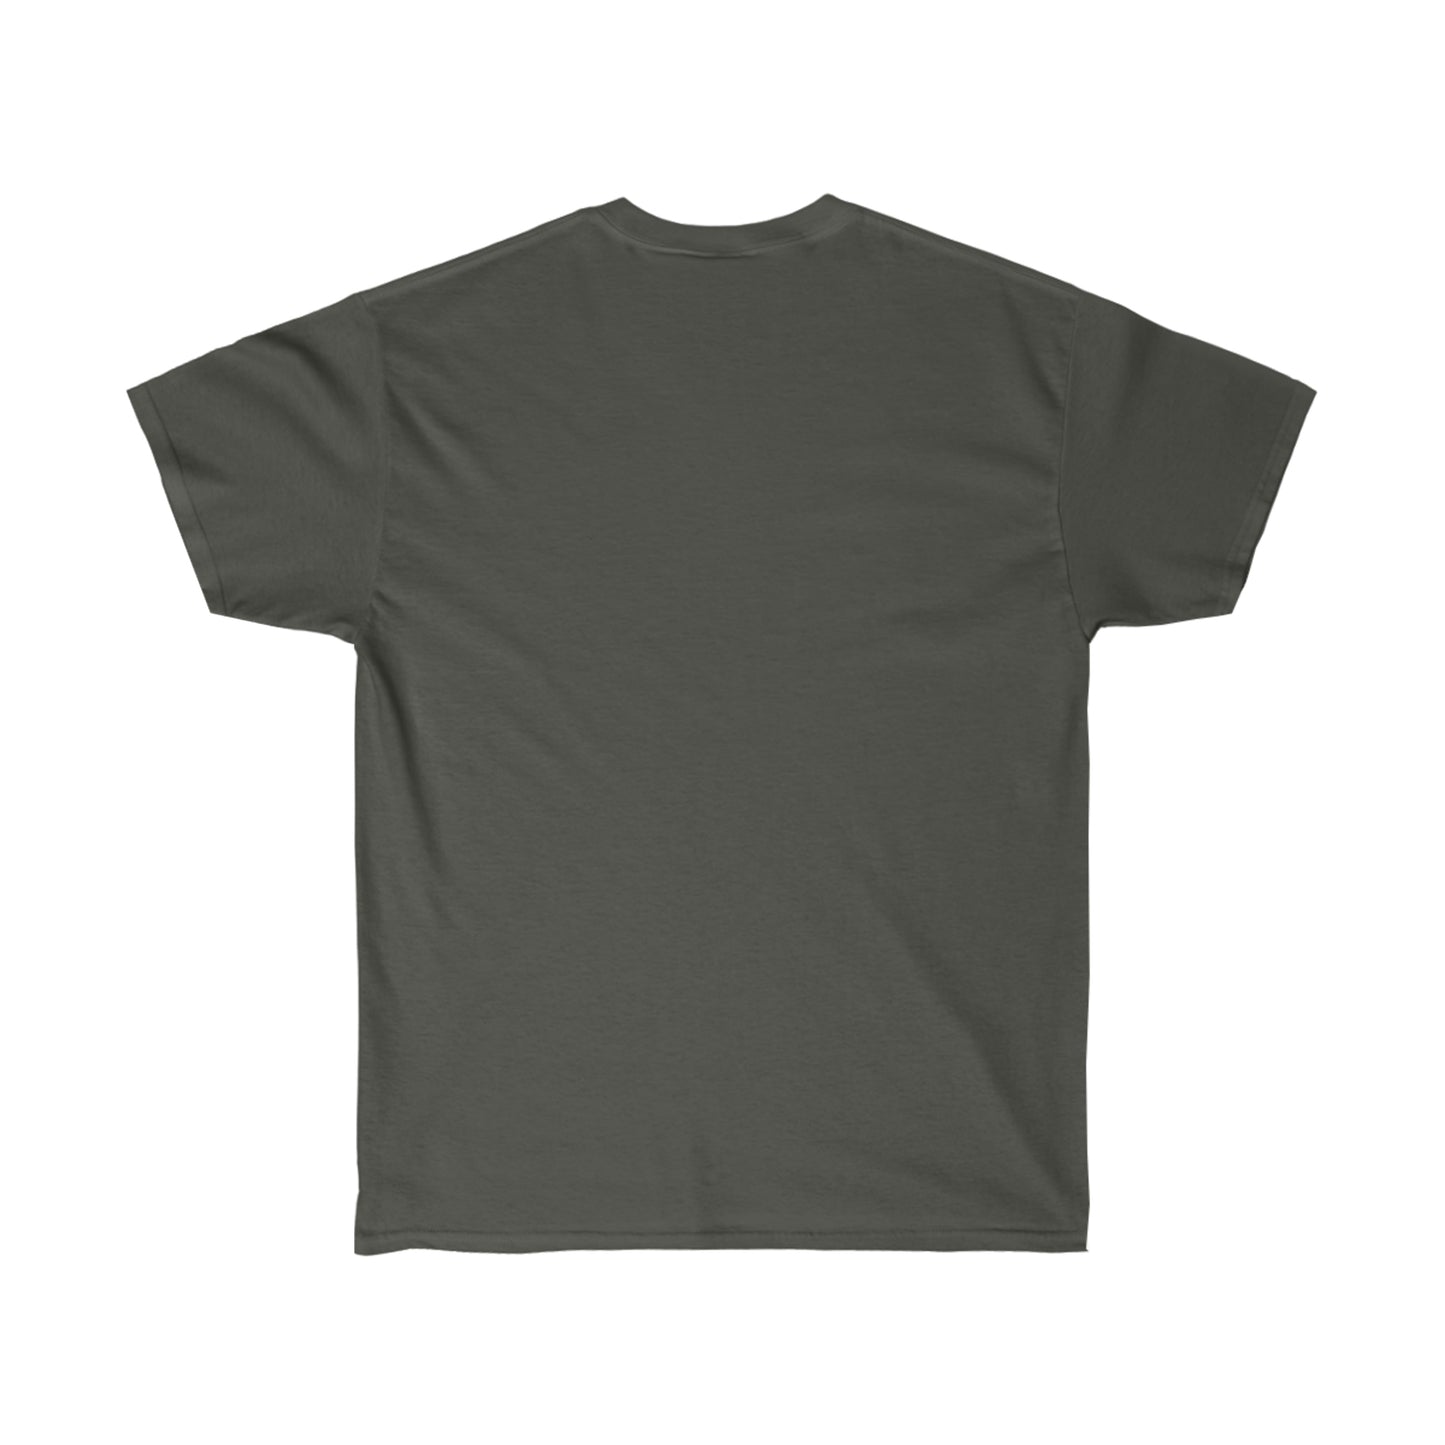 Roll for Drugs T-shirt (Black or Dark Grey)